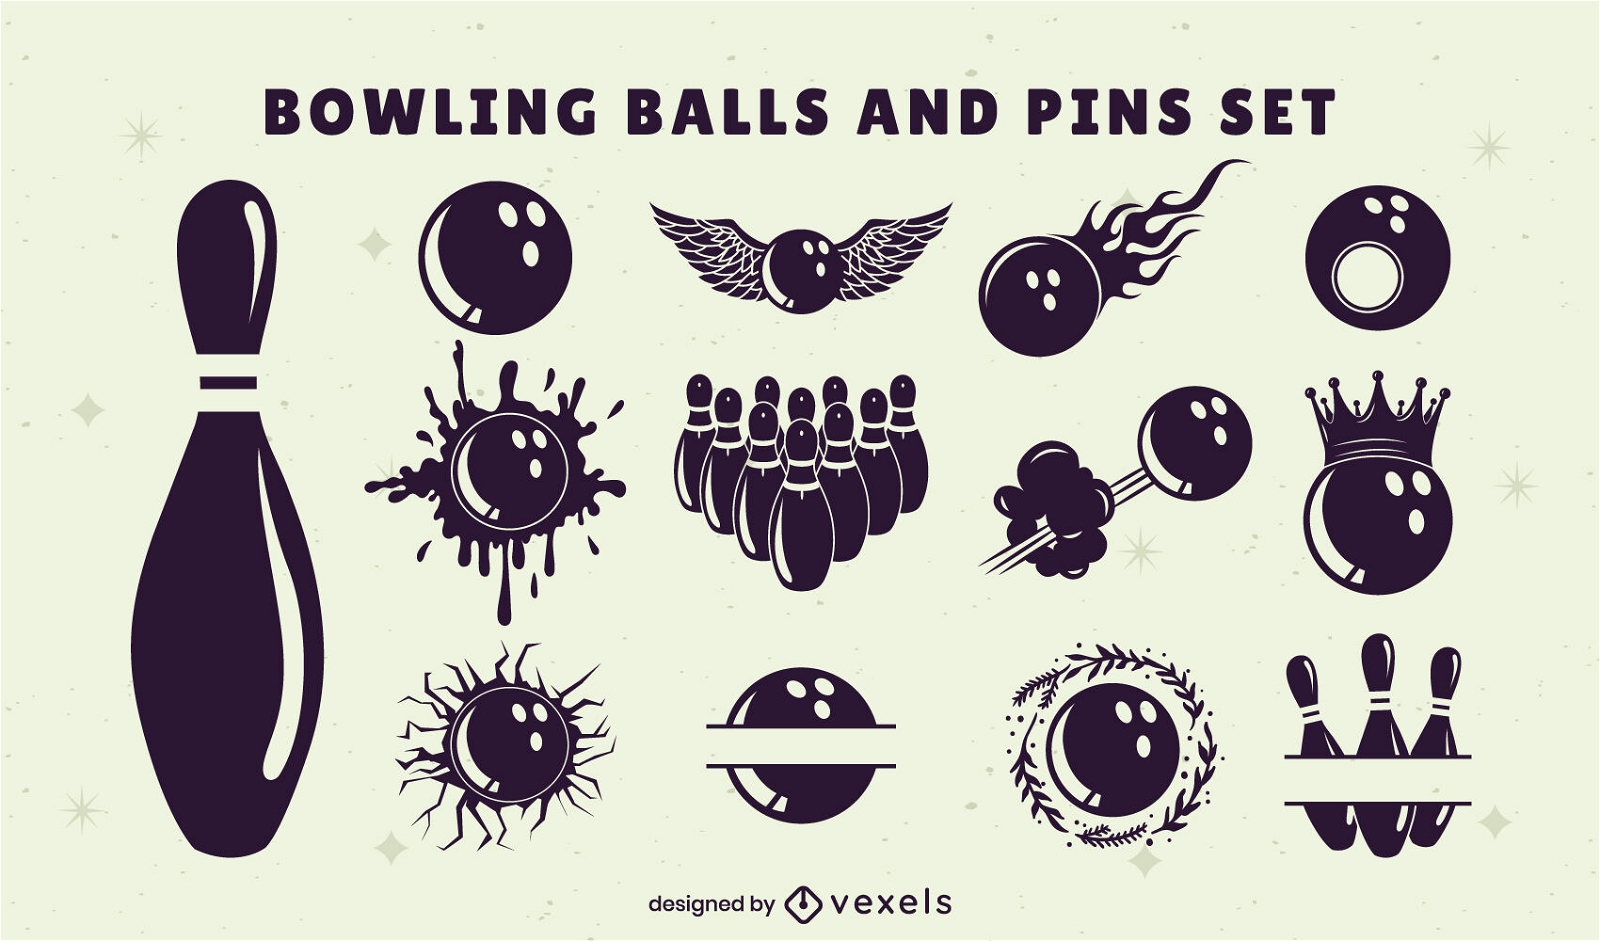 Bowling balls and pins cut out set